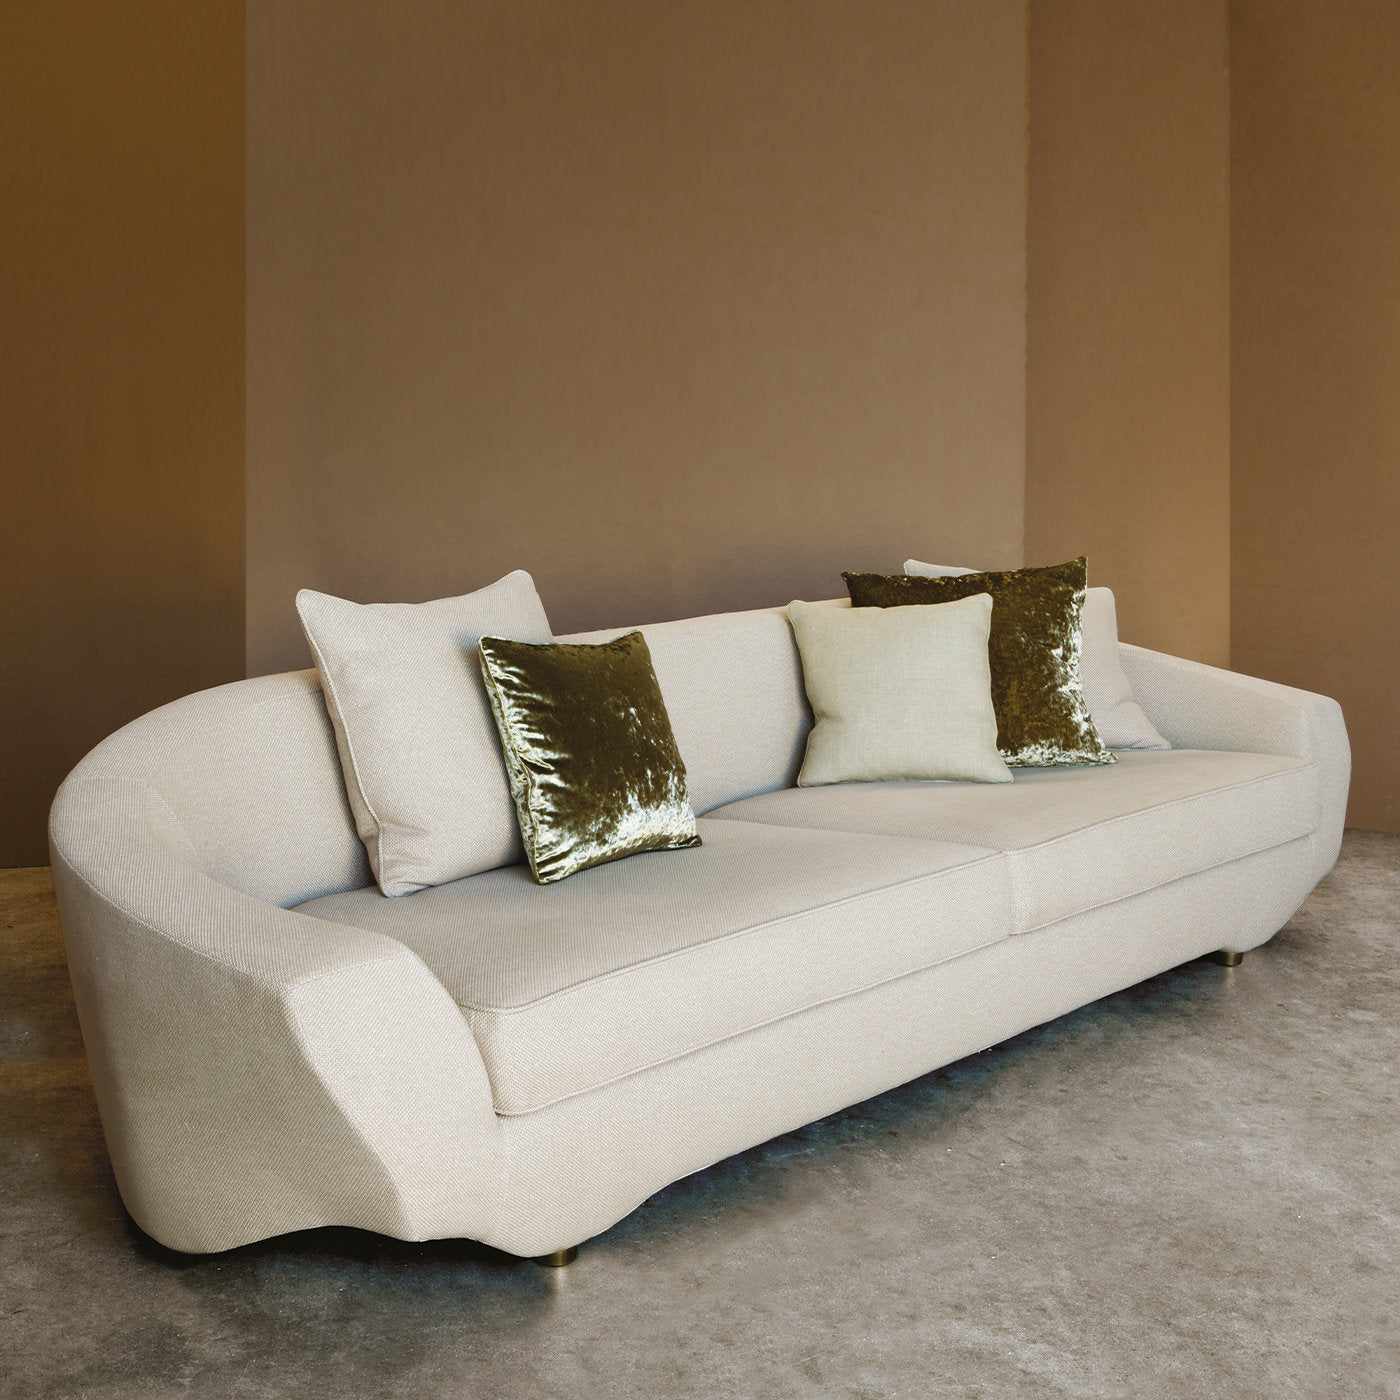 Grande Beige Sofa by Bosco Fair - Alternative view 1